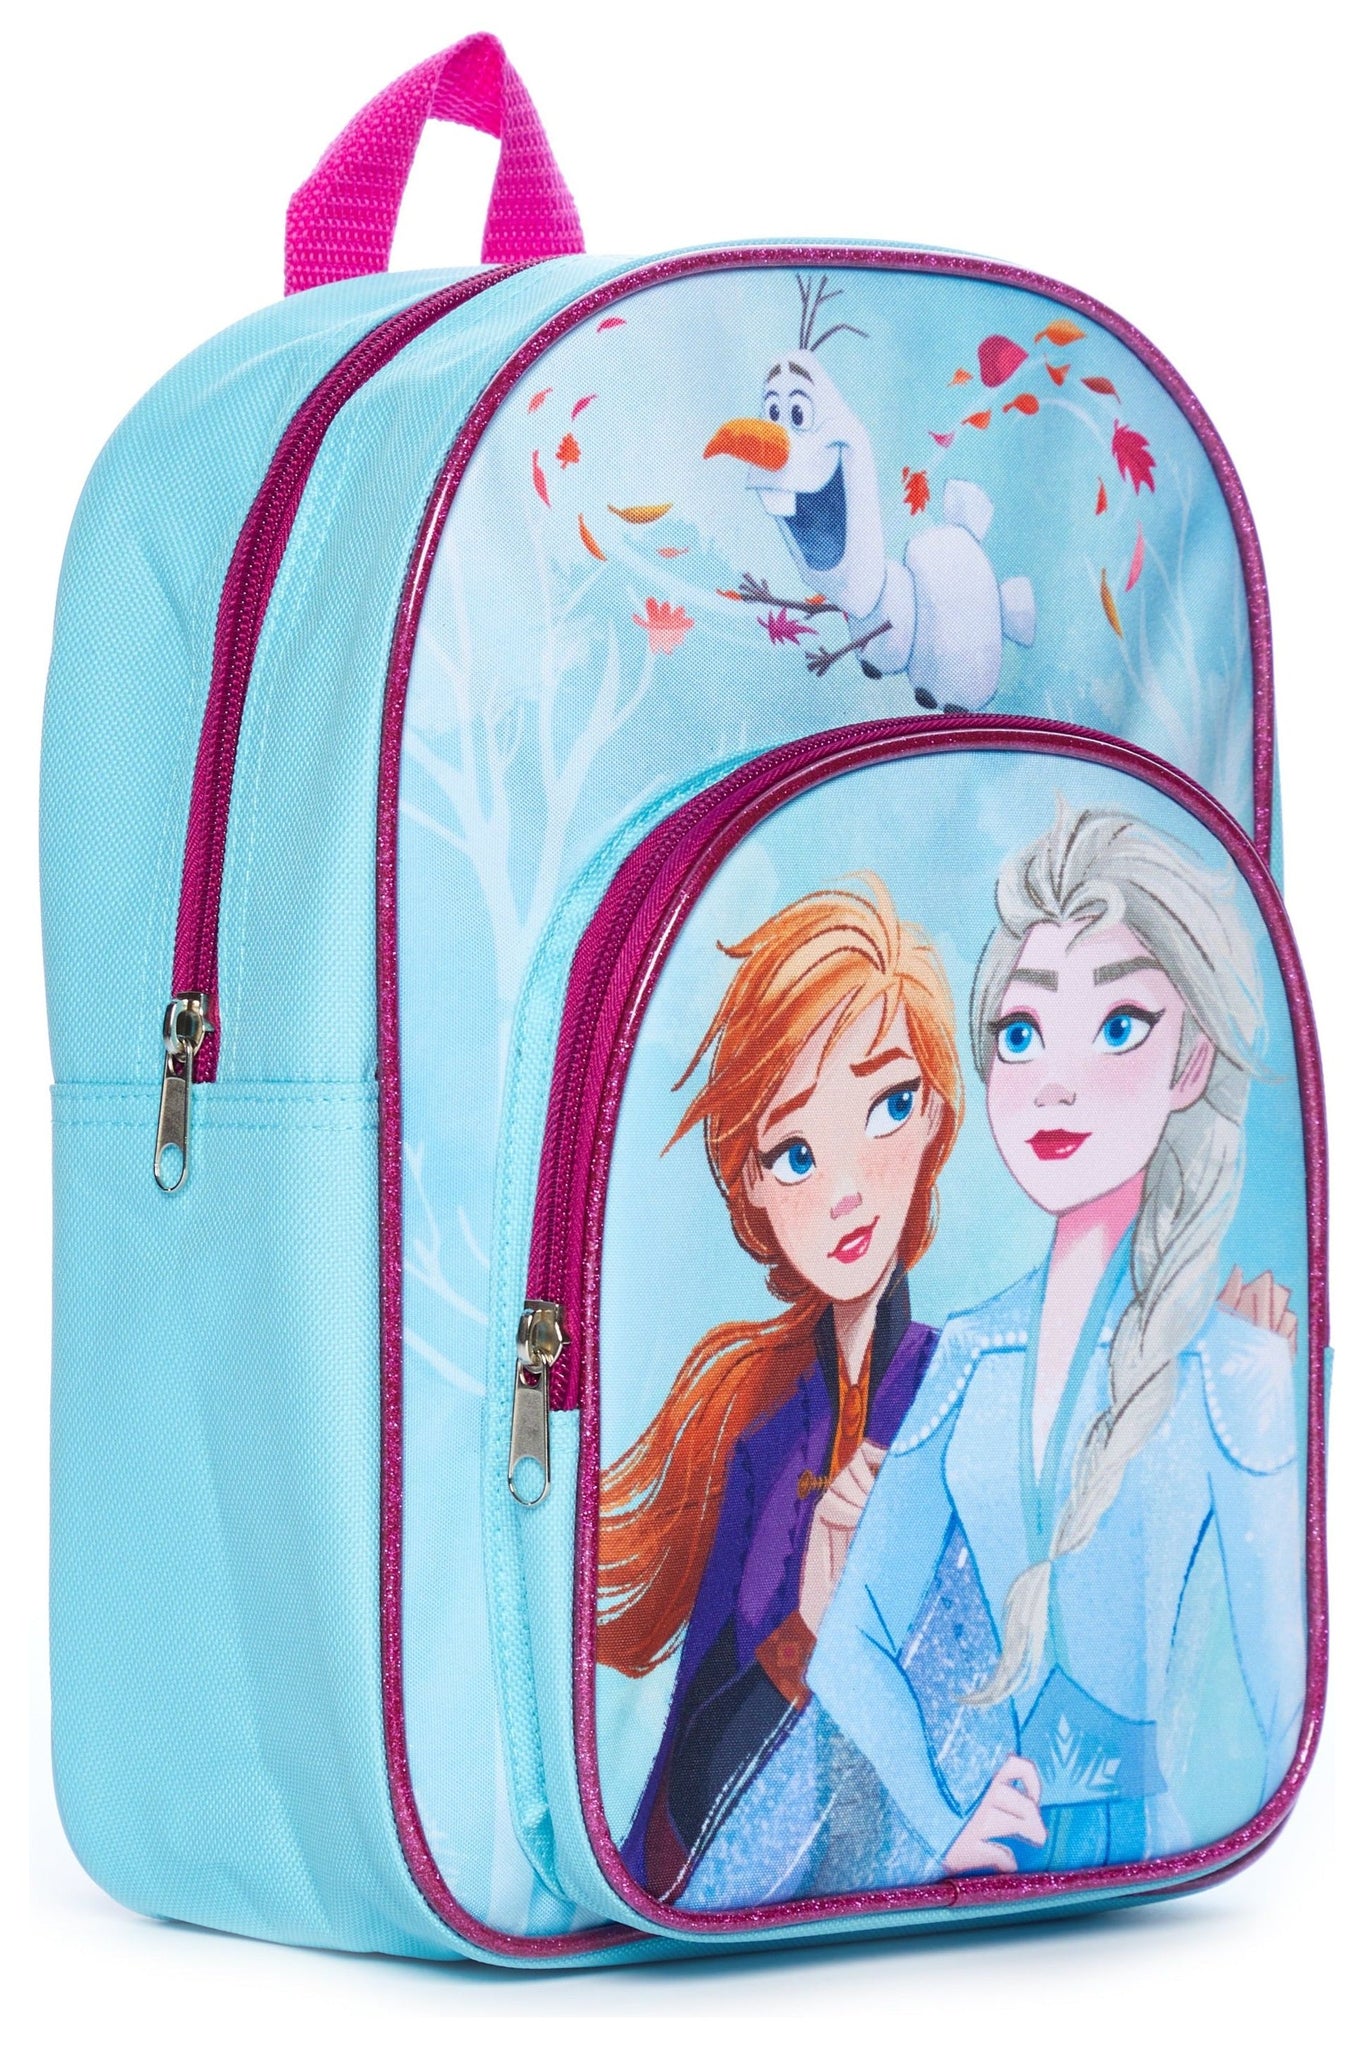 Disney Frozen Olaf Anna Elsa Backpack Nursery School Rucksack